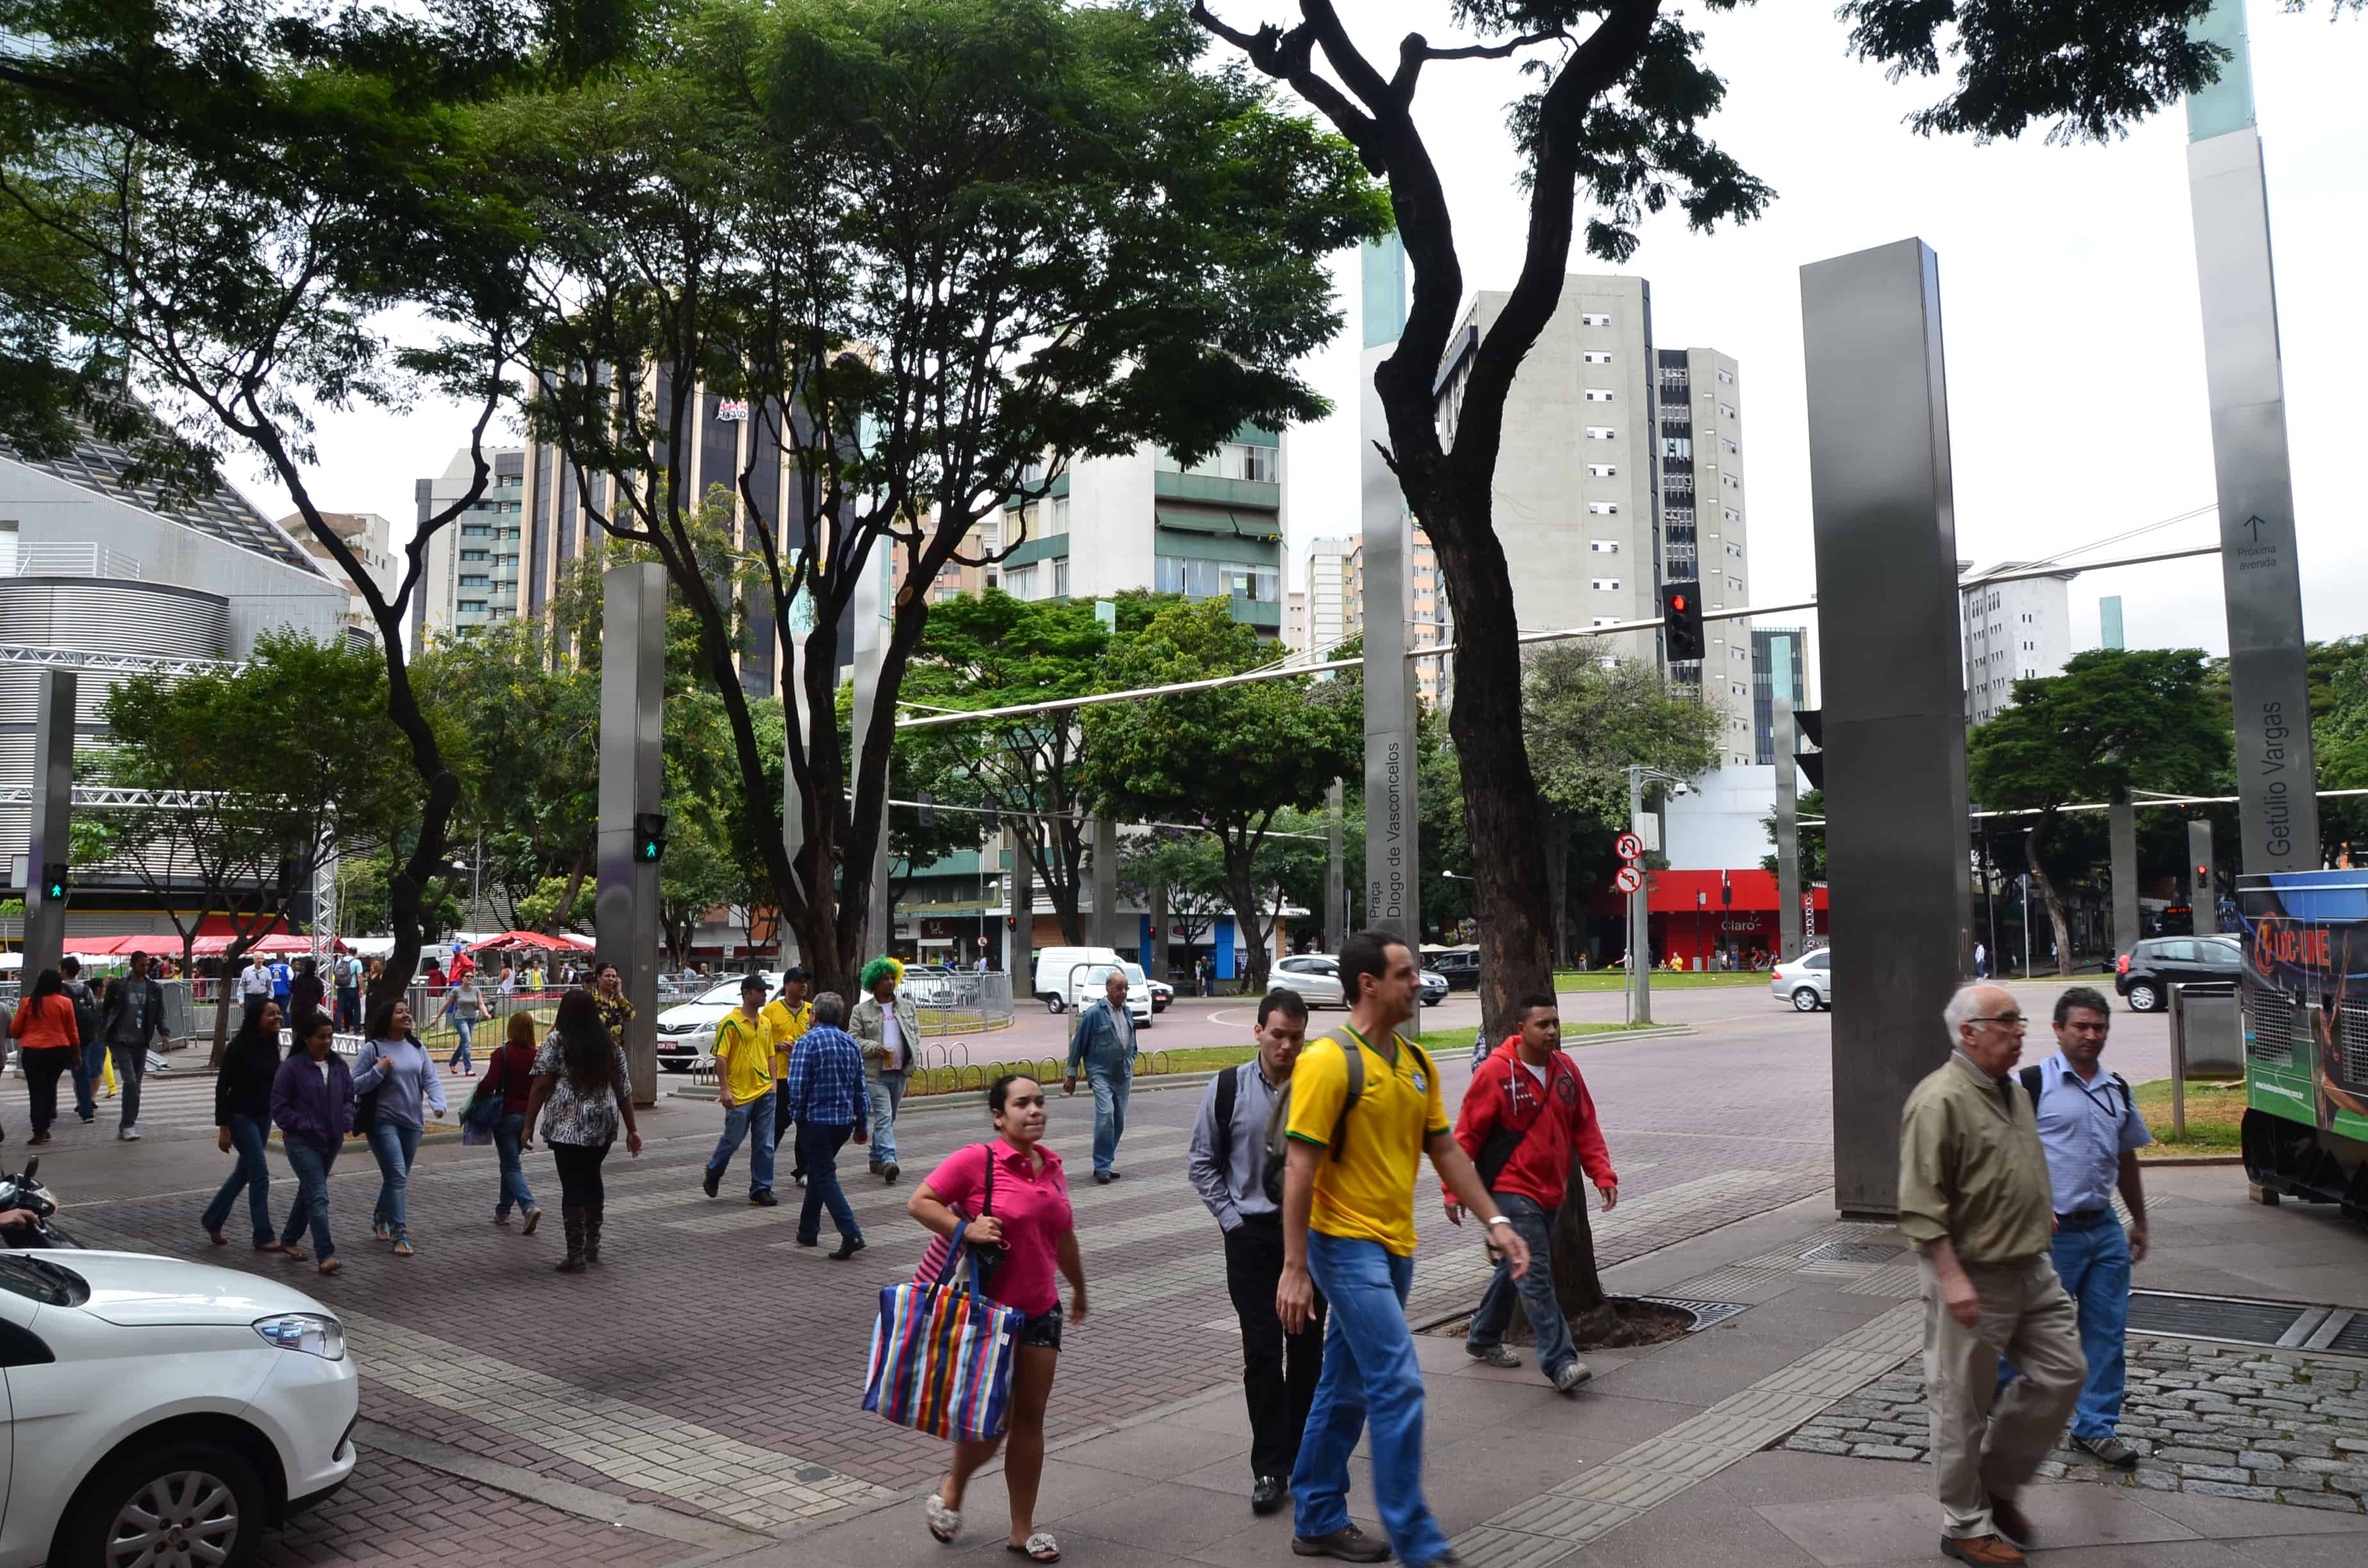 Praça da Savassi in Belo Horizonte, Brazil